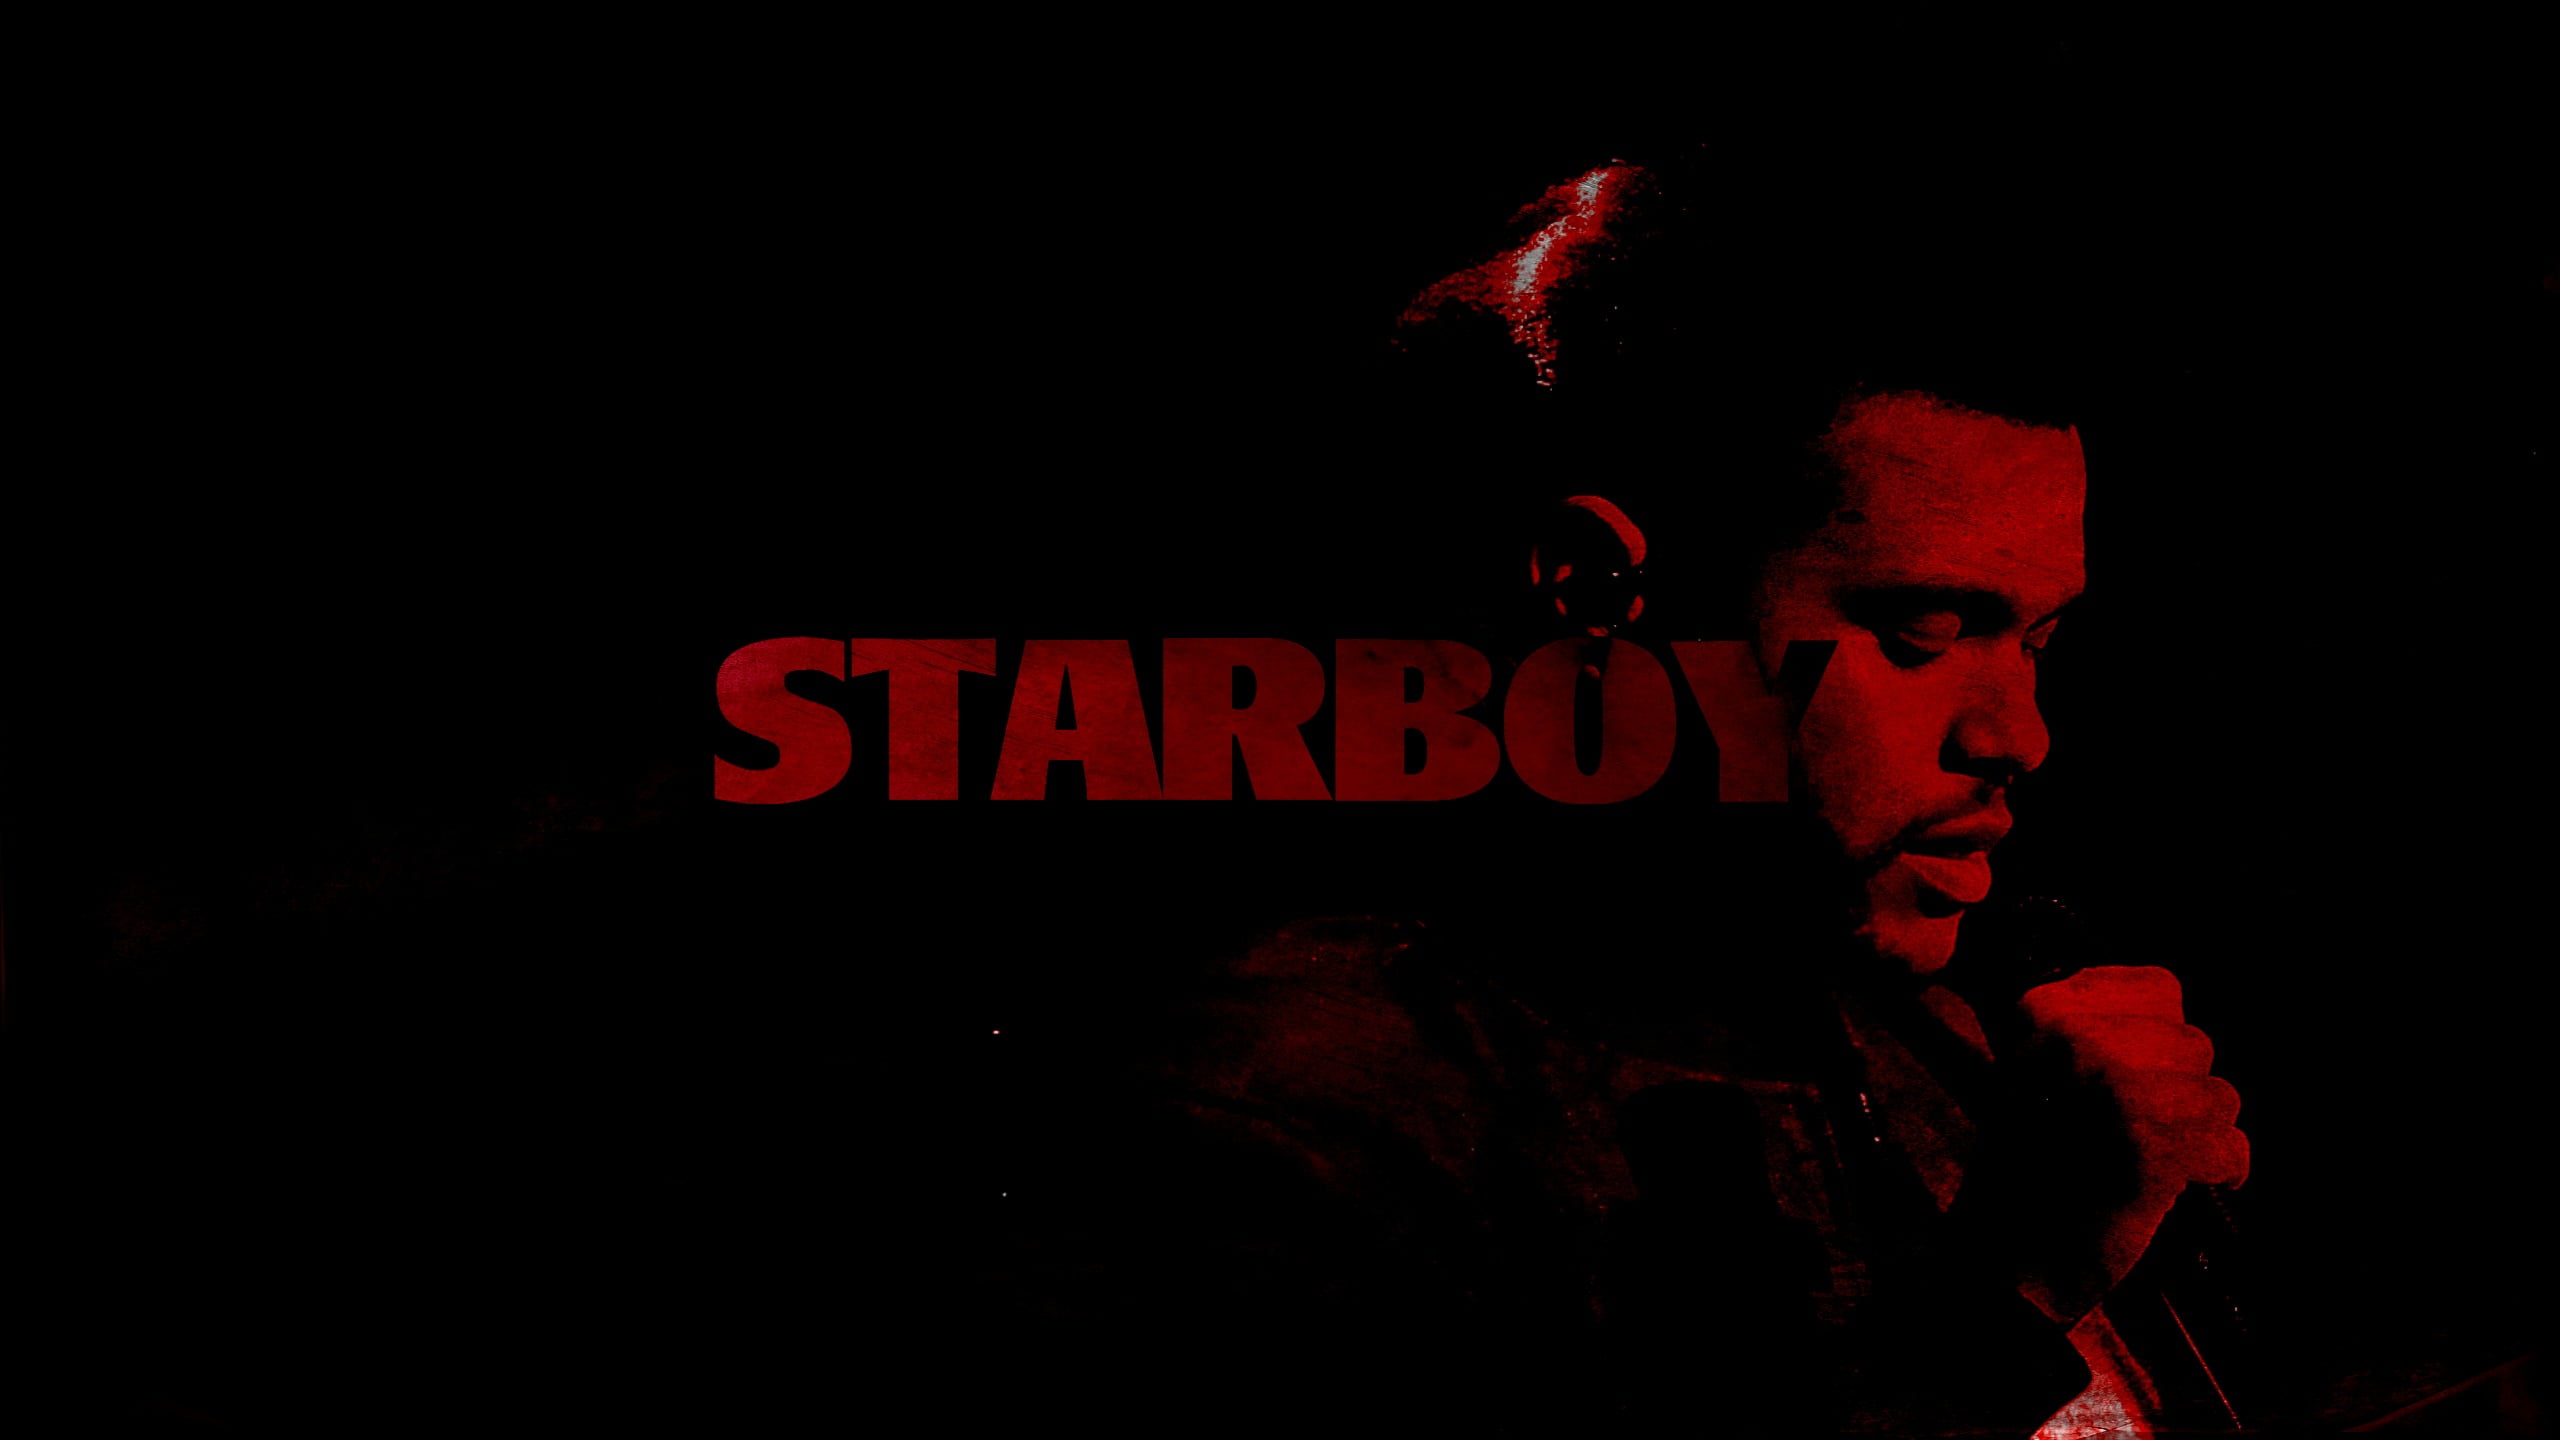 abel tesfaye, The Weeknd, XO, starboy, singer, text, red, western script